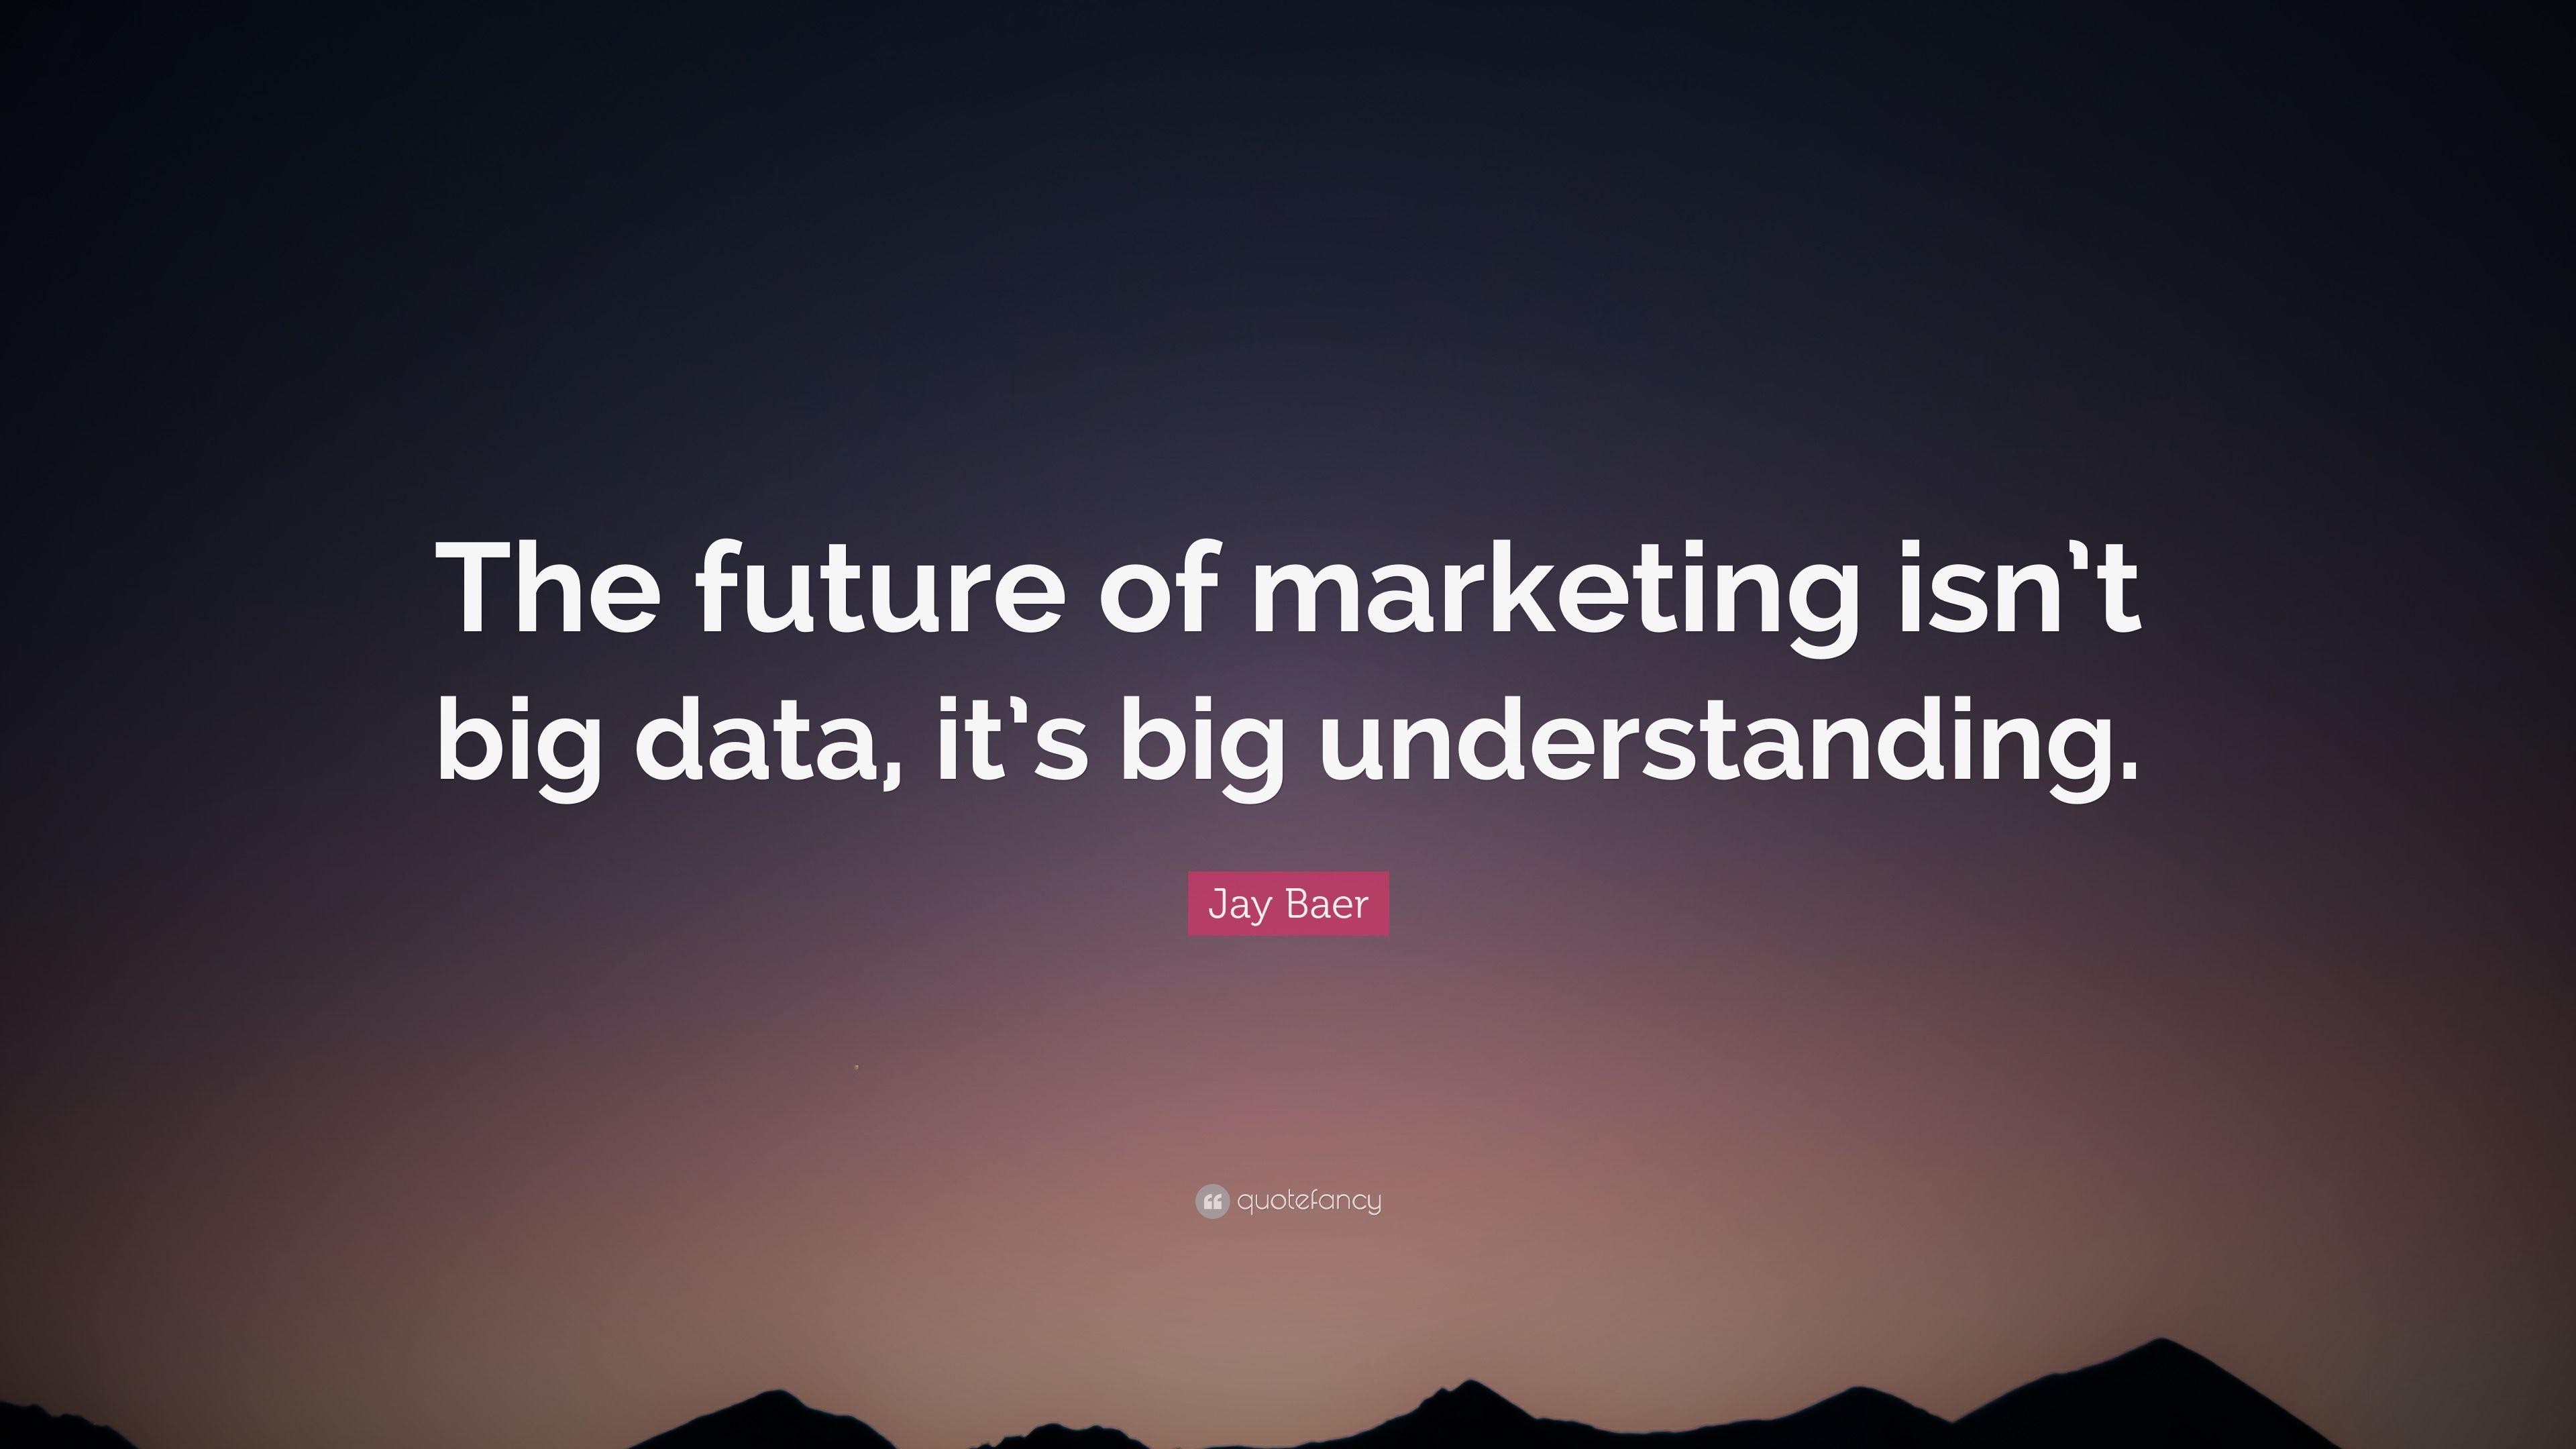 Jay Baer Quote: “The future of marketing isn't big data, it's big